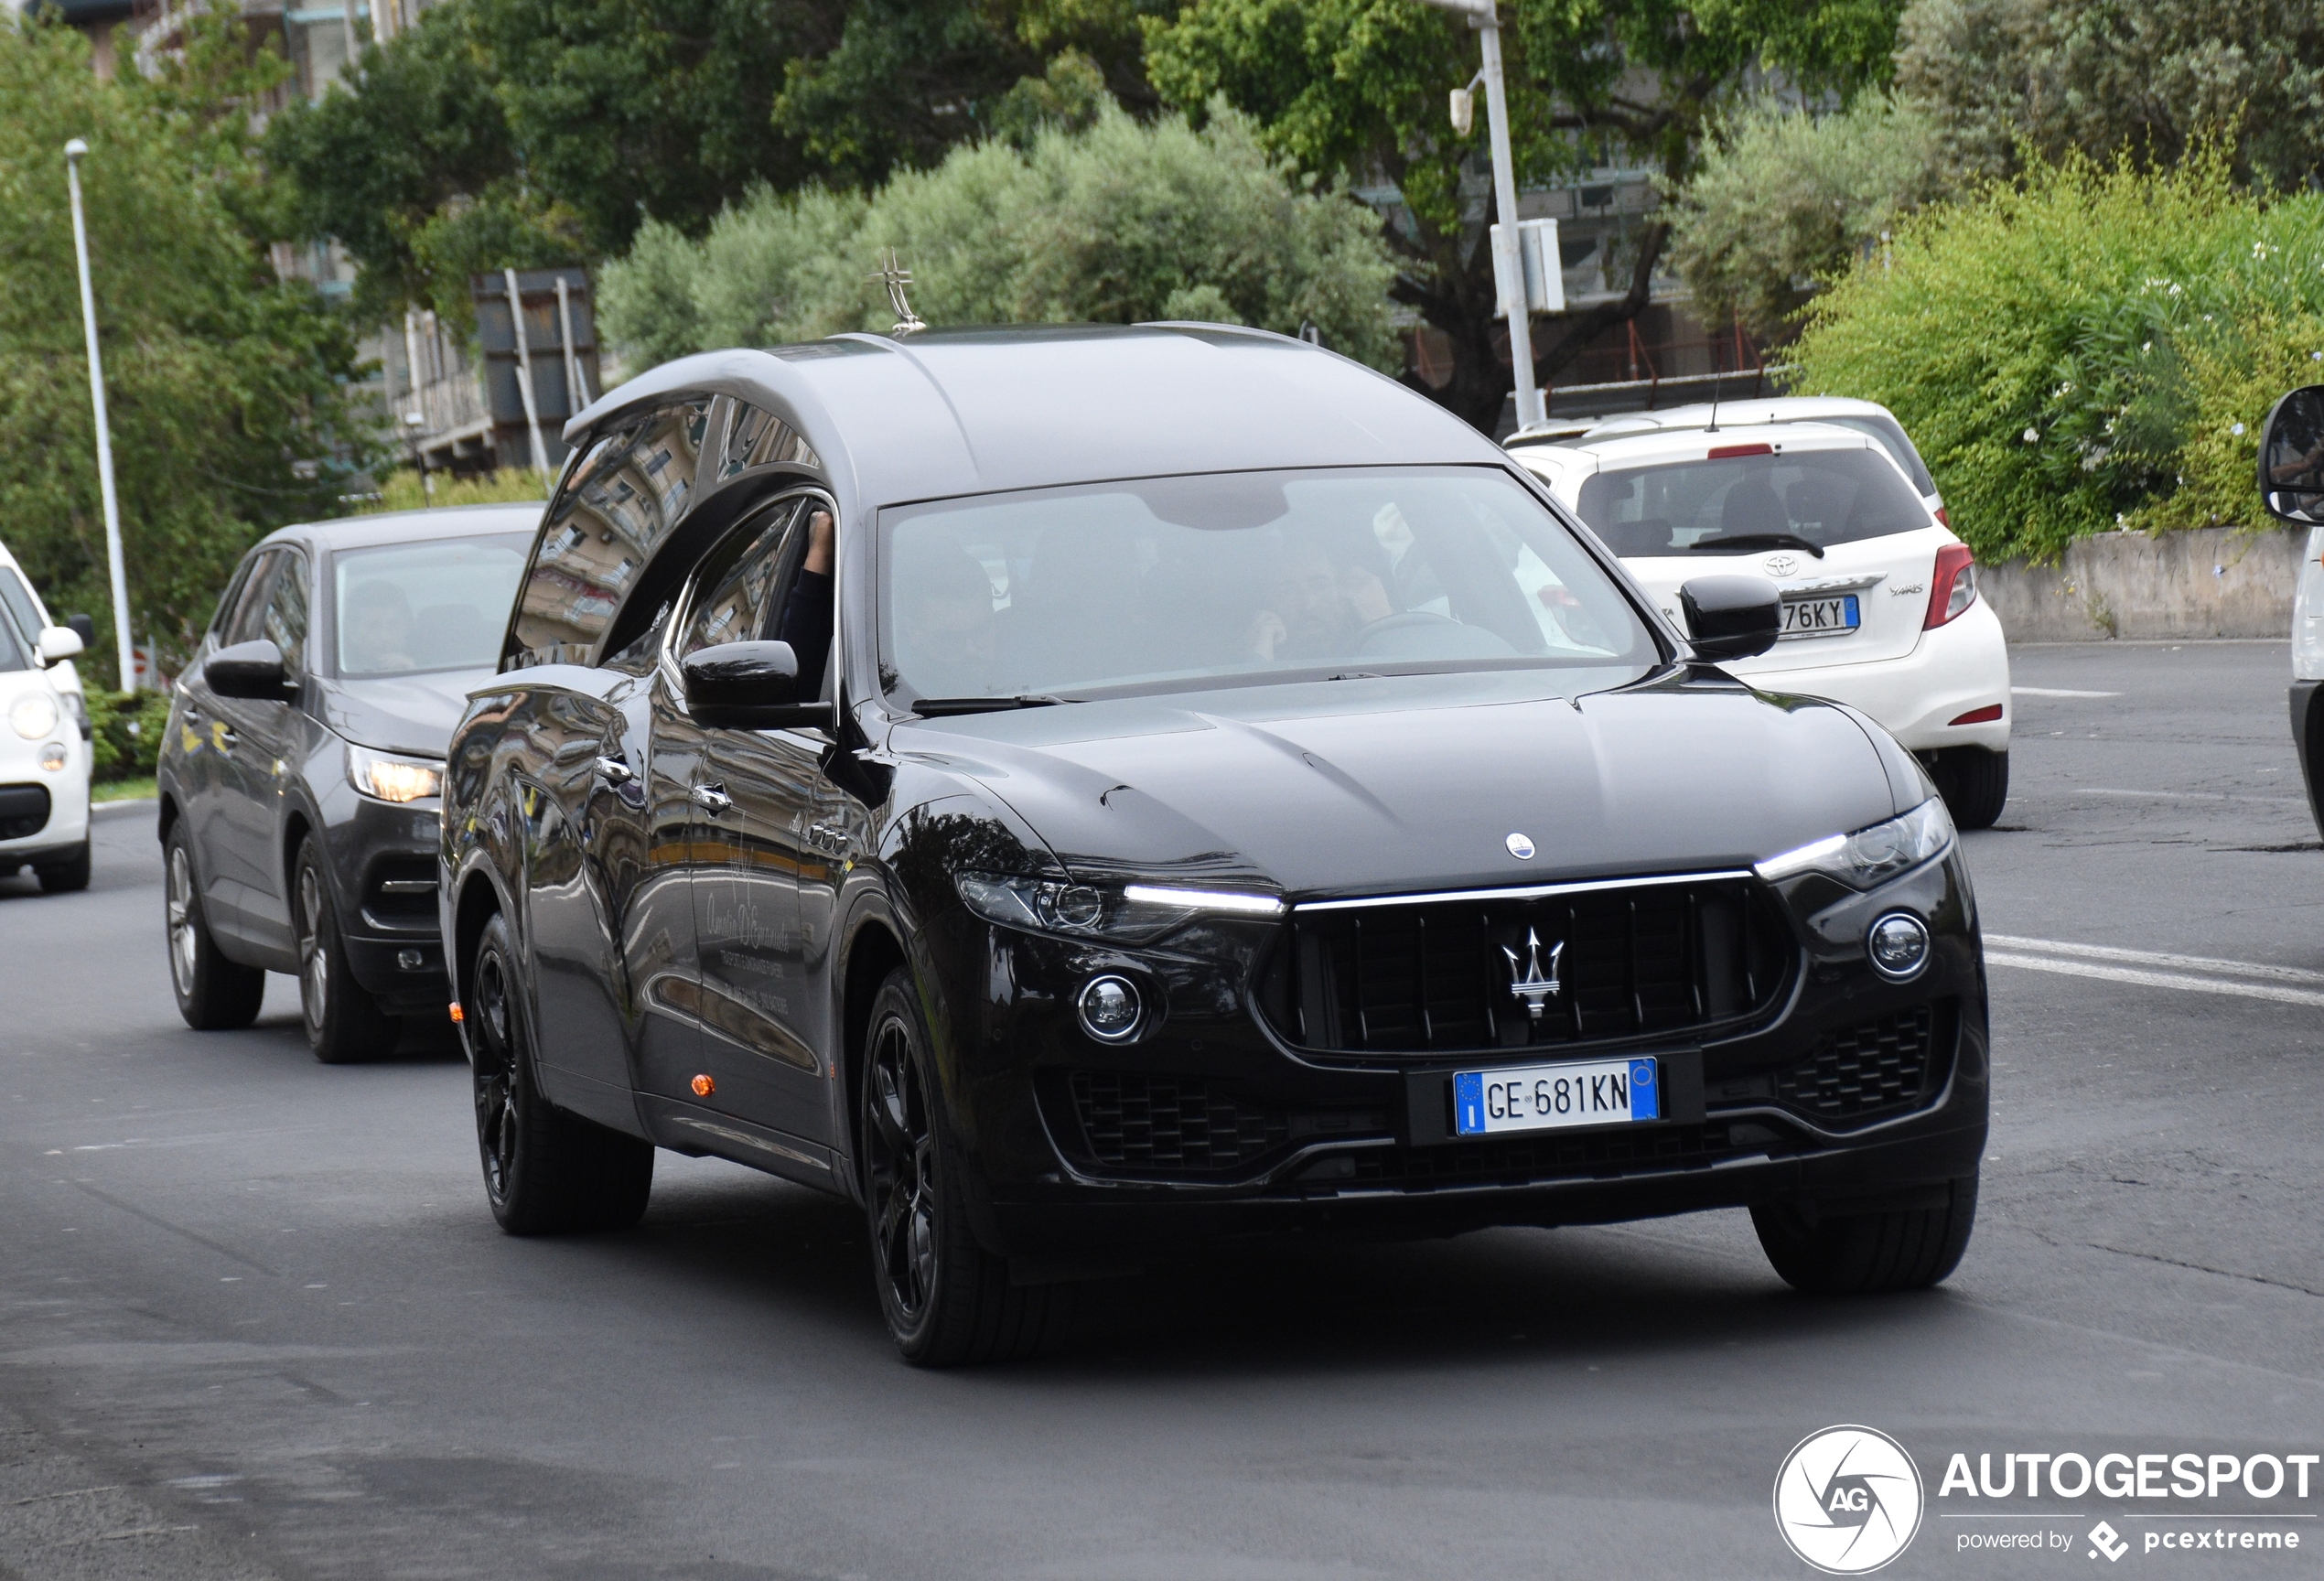 Maserati is converted into a hearse